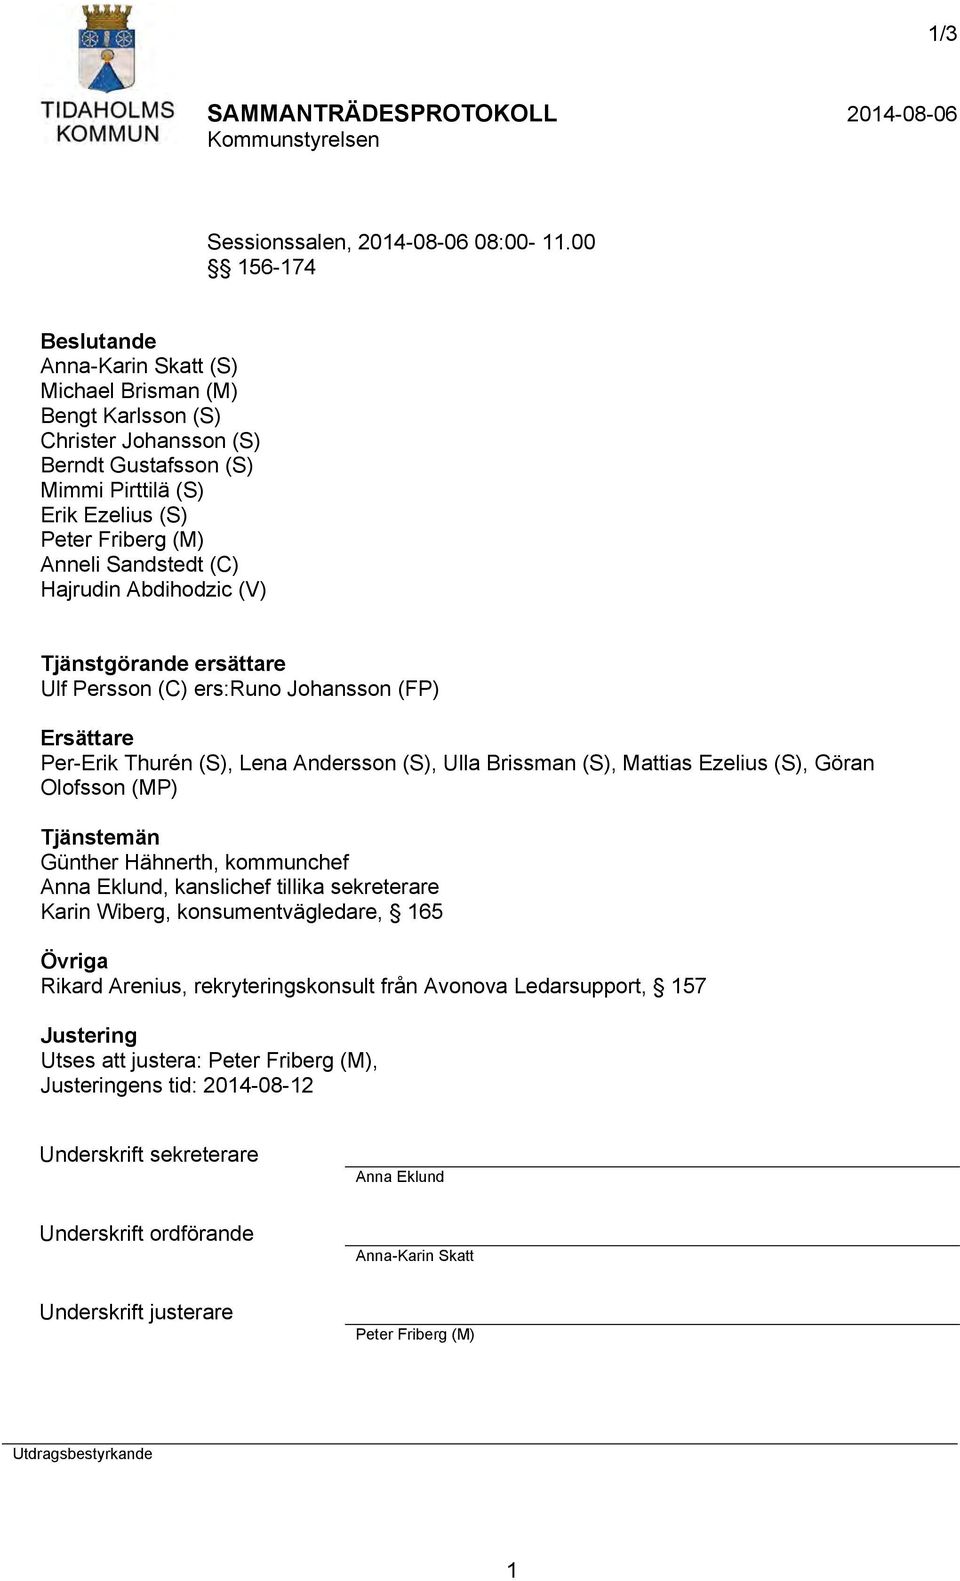 (C) Hajrudin Abdihodzic (V) Tjänstgörande ersättare Ulf Persson (C) ers:runo Johansson (FP) Ersättare Per-Erik Thurén (S), Lena Andersson (S), Ulla Brissman (S), Mattias Ezelius (S), Göran Olofsson